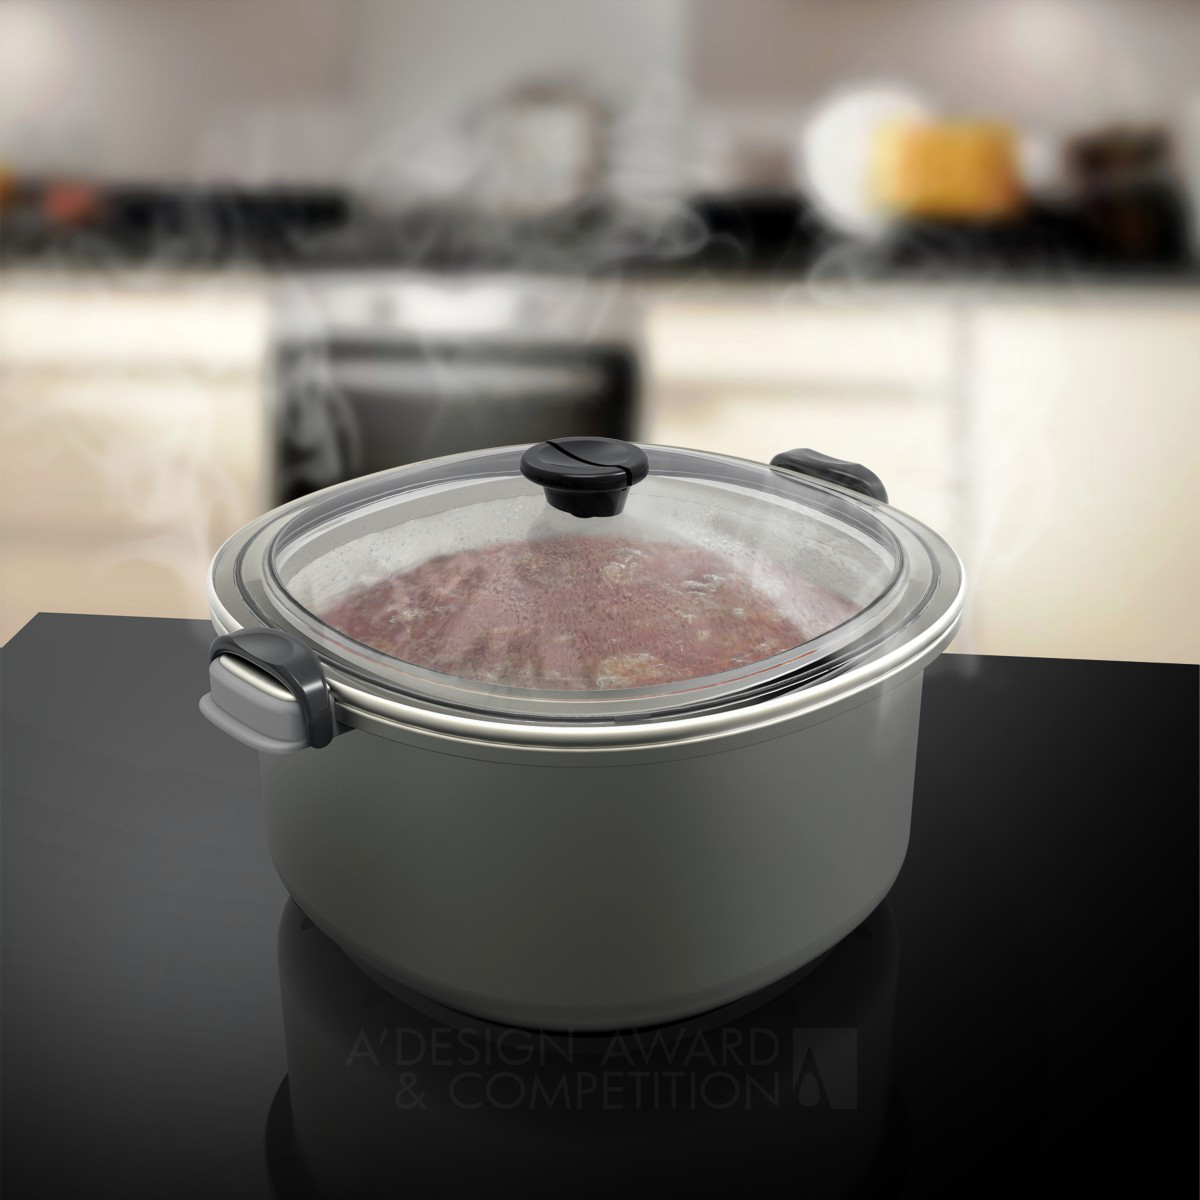 Heat X Cooking Pot by Hakan Gürsu Bronze Bakeware, Tableware, Drinkware and Cookware Design Award Winner 2017 